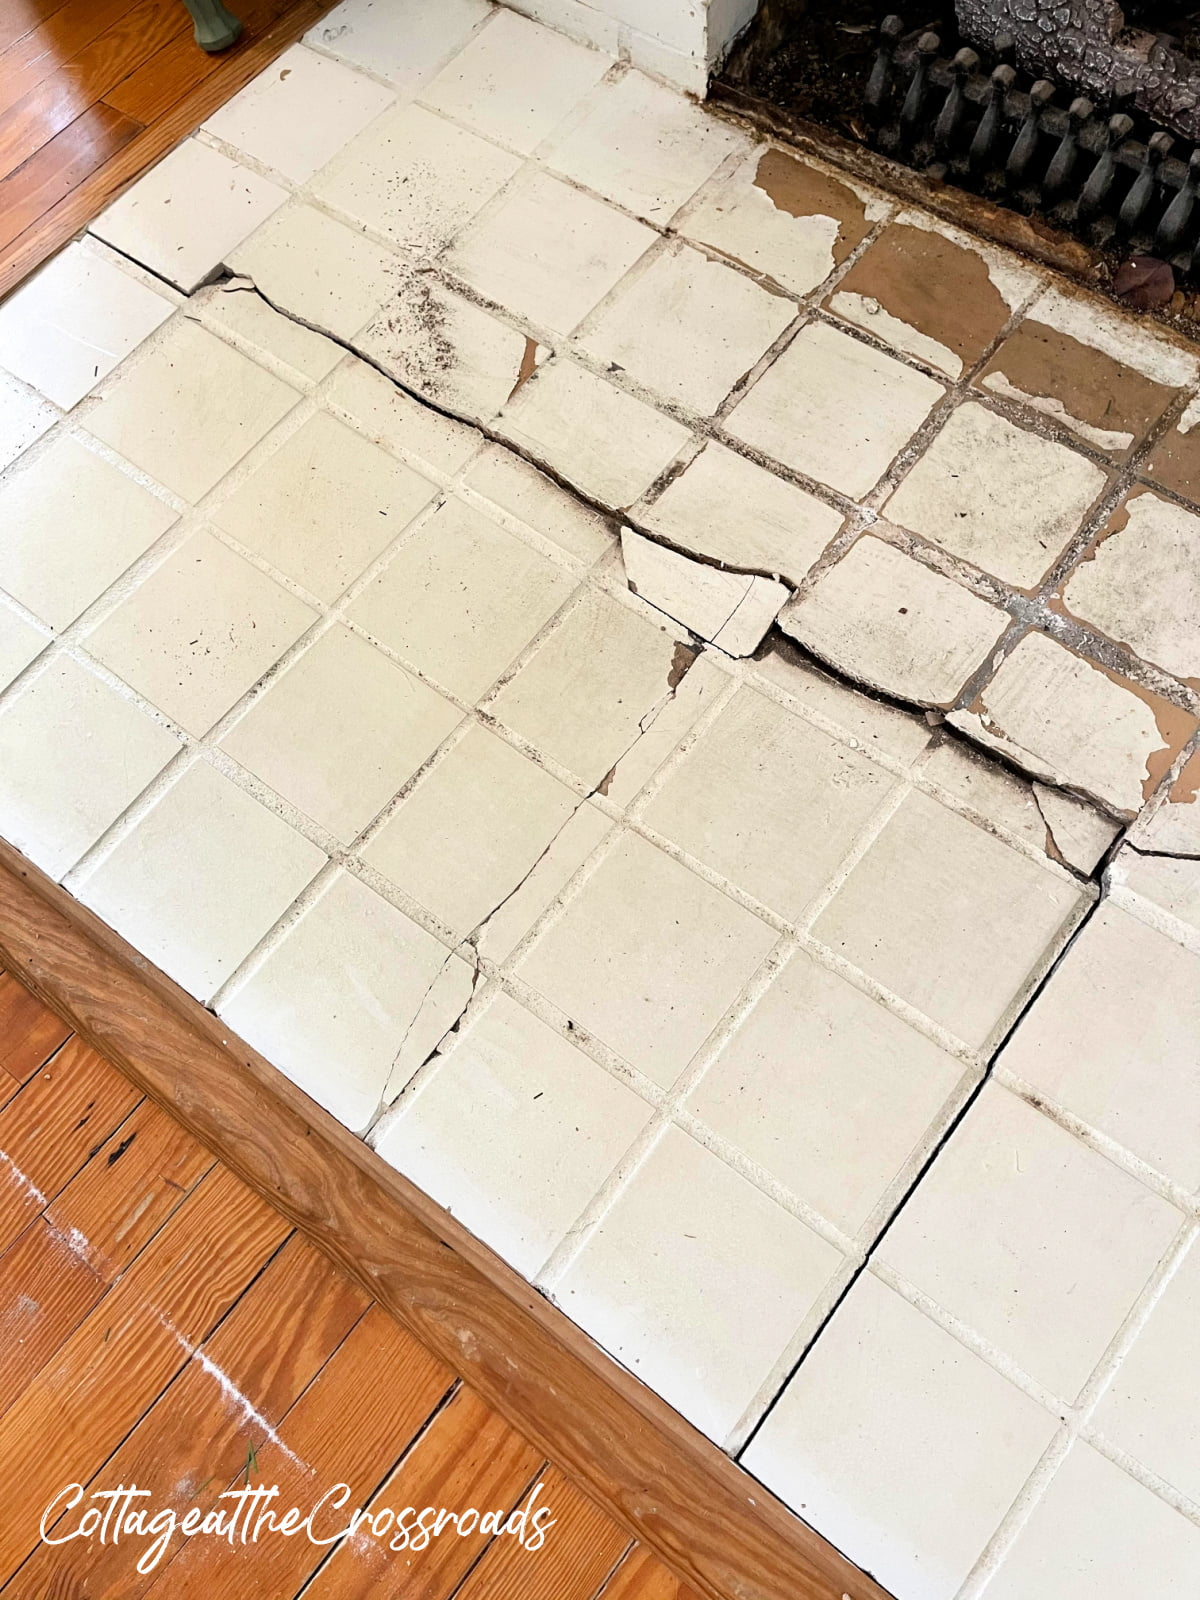 Cracked tile and sunken floor near fireplace